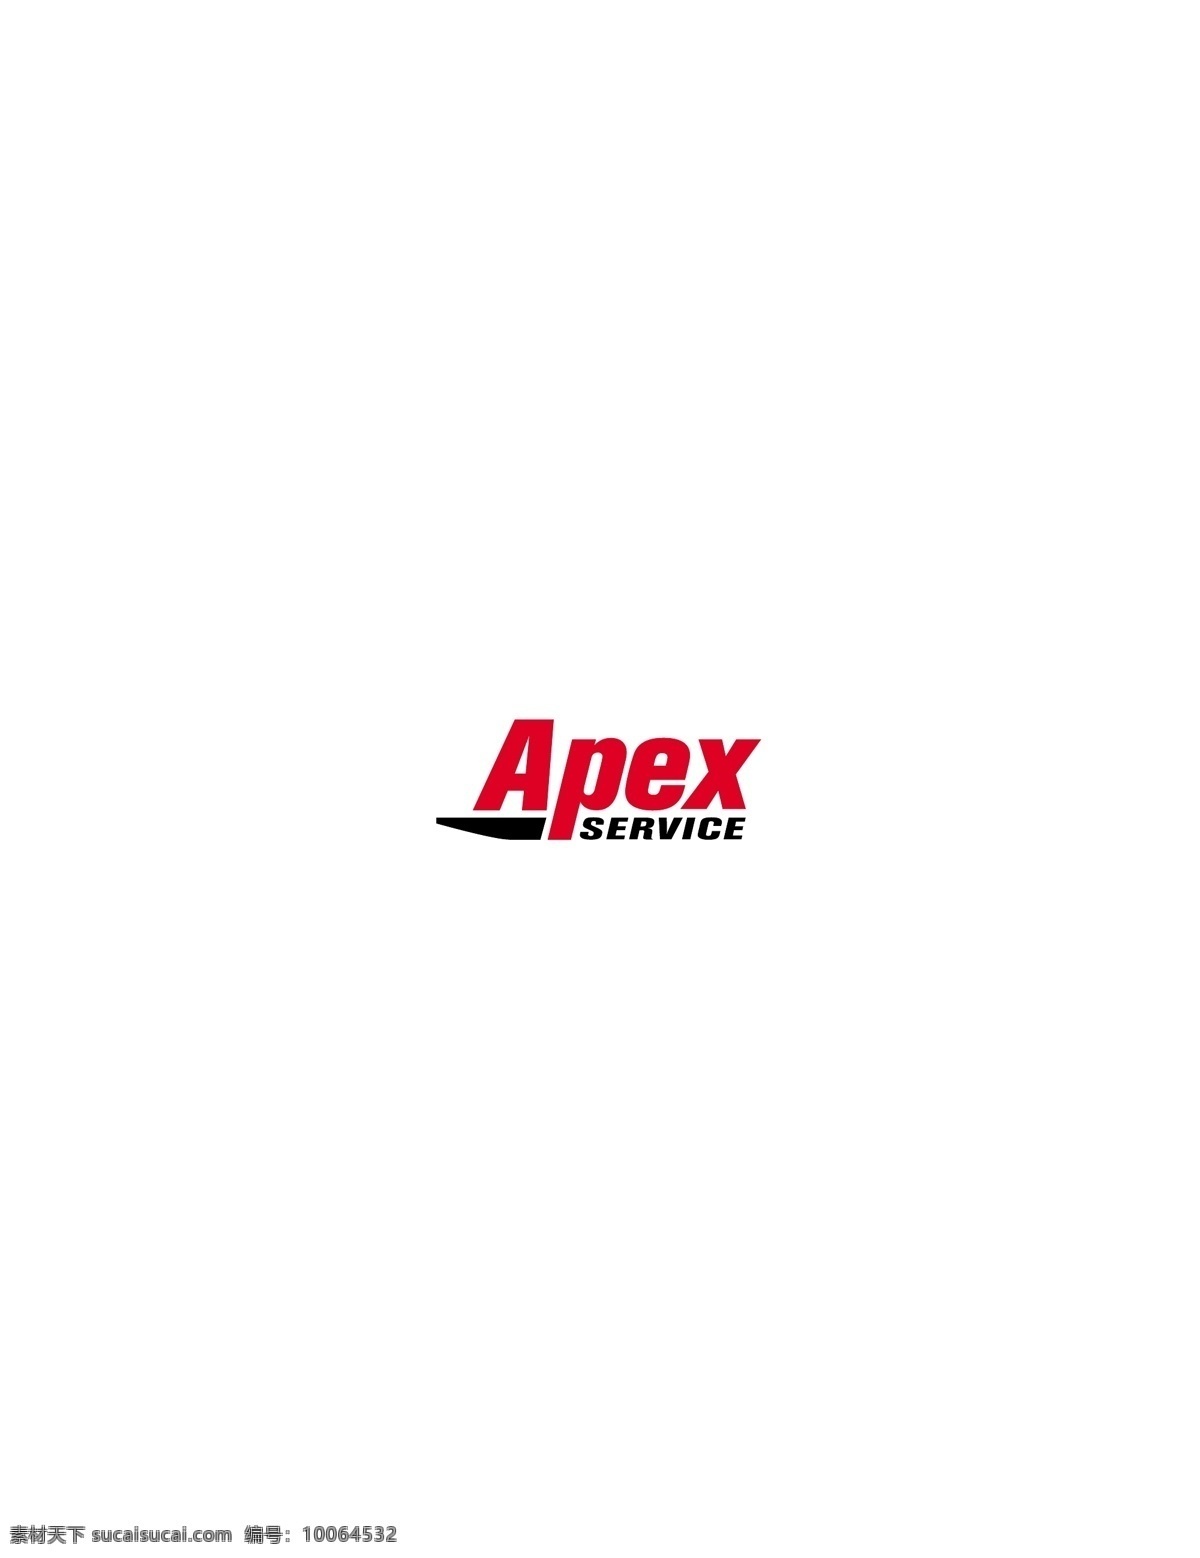 logo大全 logo 设计欣赏 商业矢量 矢量下载 apex service 标志设计 欣赏 网页矢量 矢量图 其他矢量图